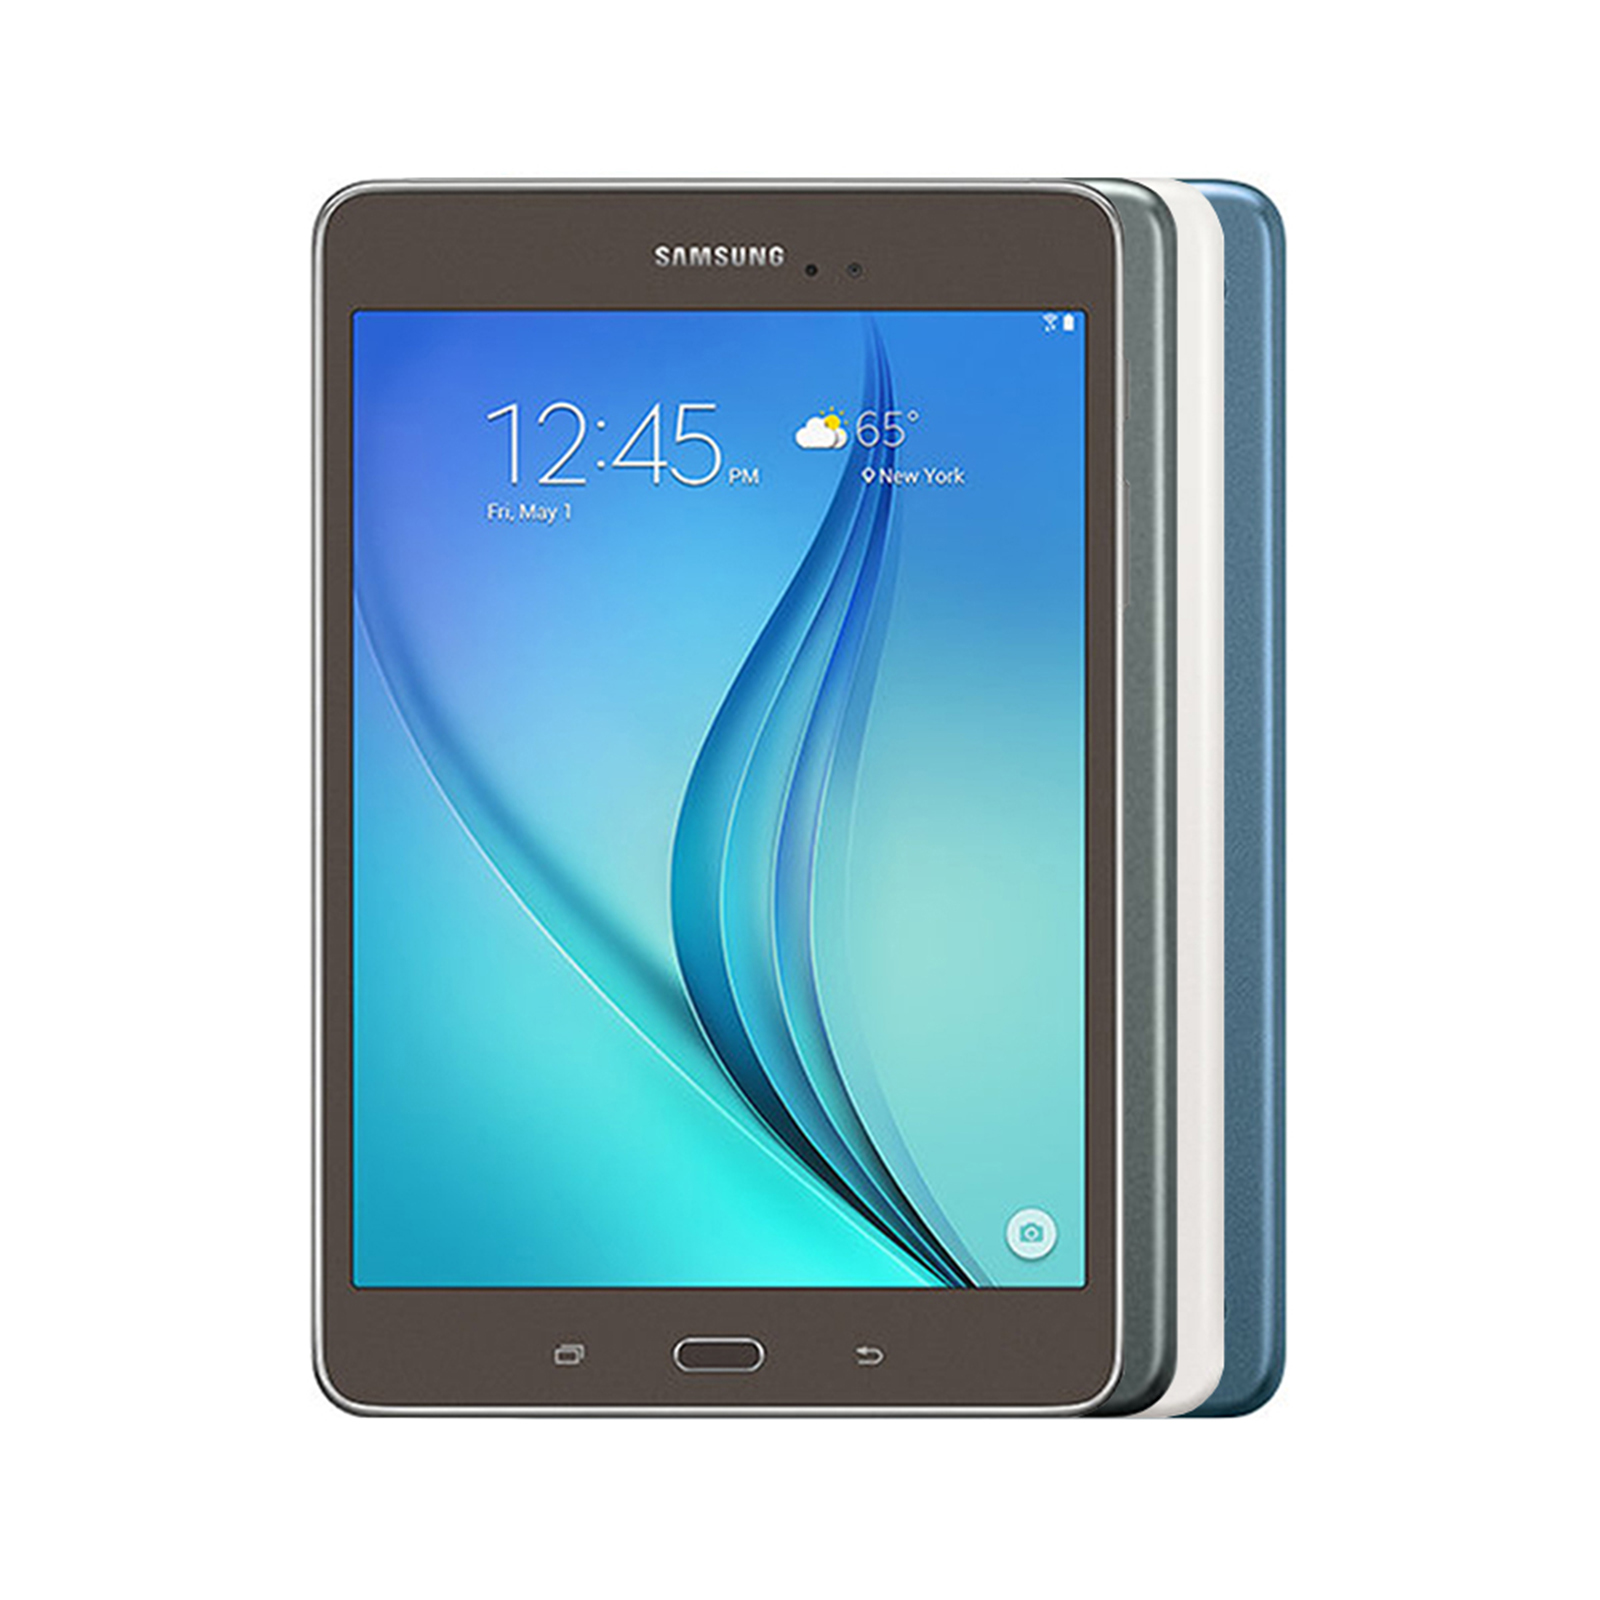 Samsung Galaxy Tab A 8.0 2015 -Very Good Condition